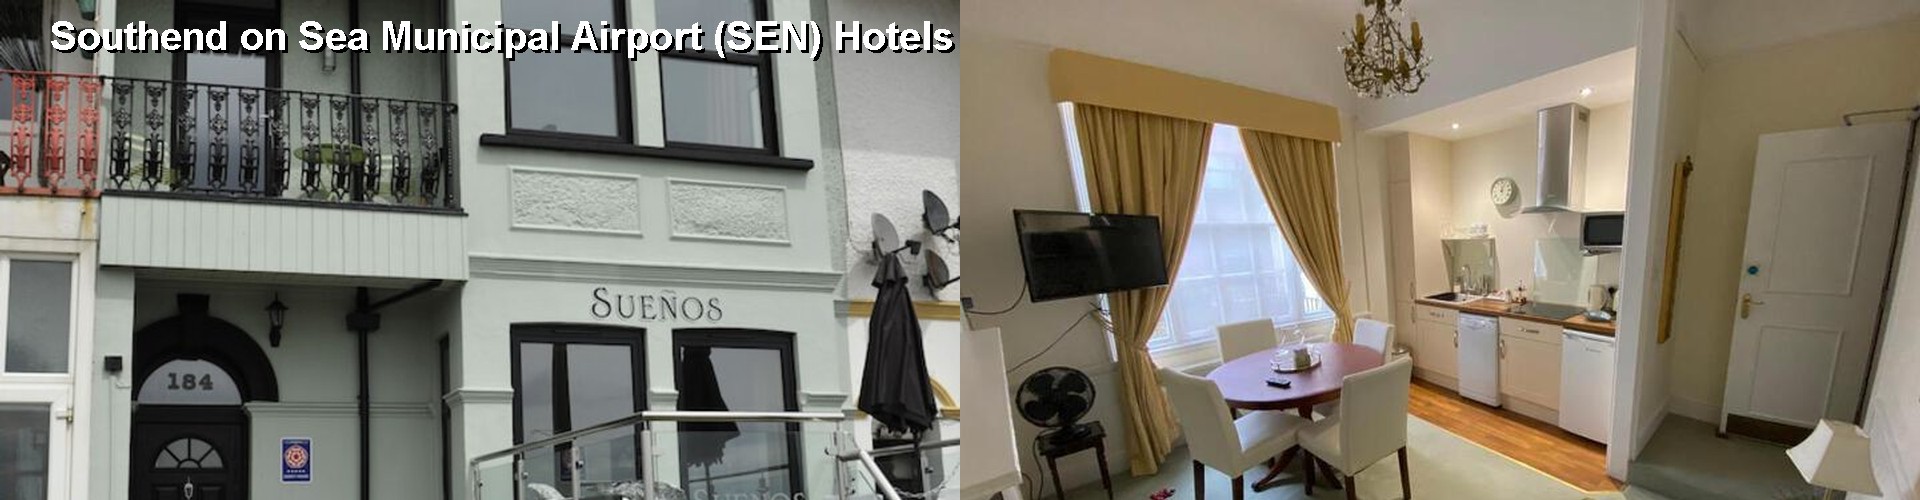 4 Best Hotels near Southend on Sea Municipal Airport (SEN)